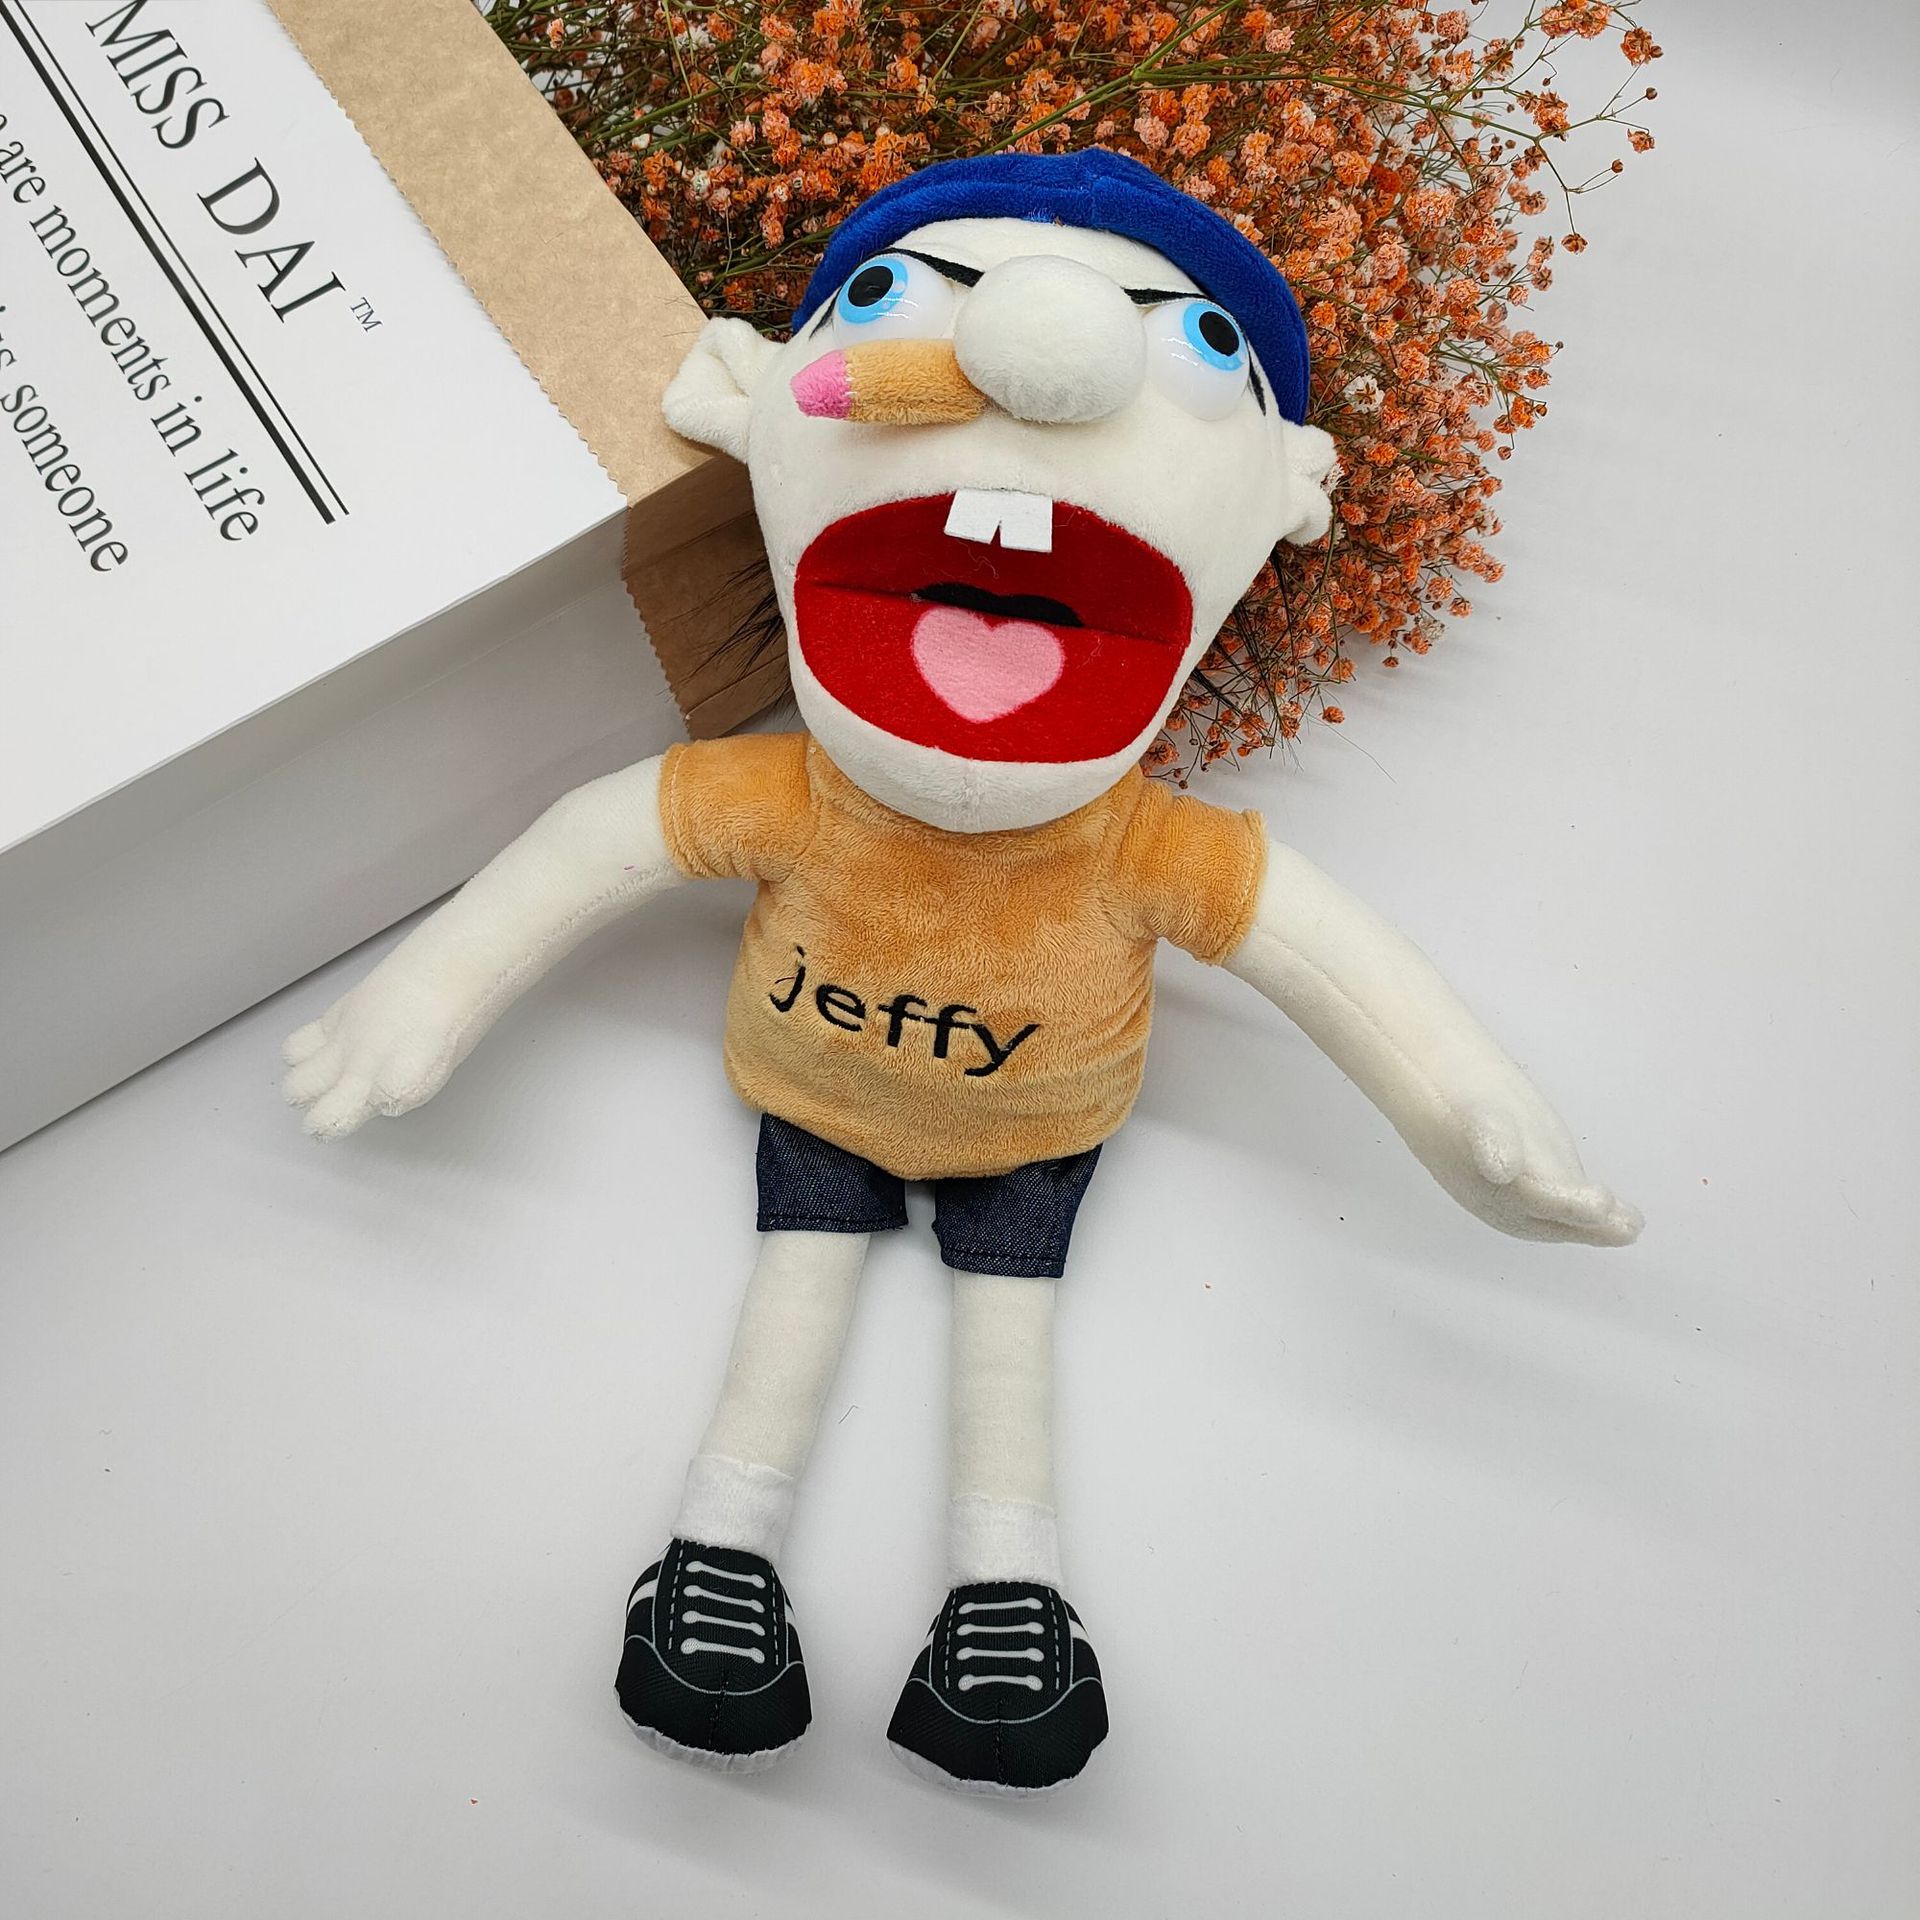 2022 New Cartoon Jeffy The Puppet Plush Toy Soft Stuffed Peluches Dolls Christmas Birthday Gift for Girls Kids